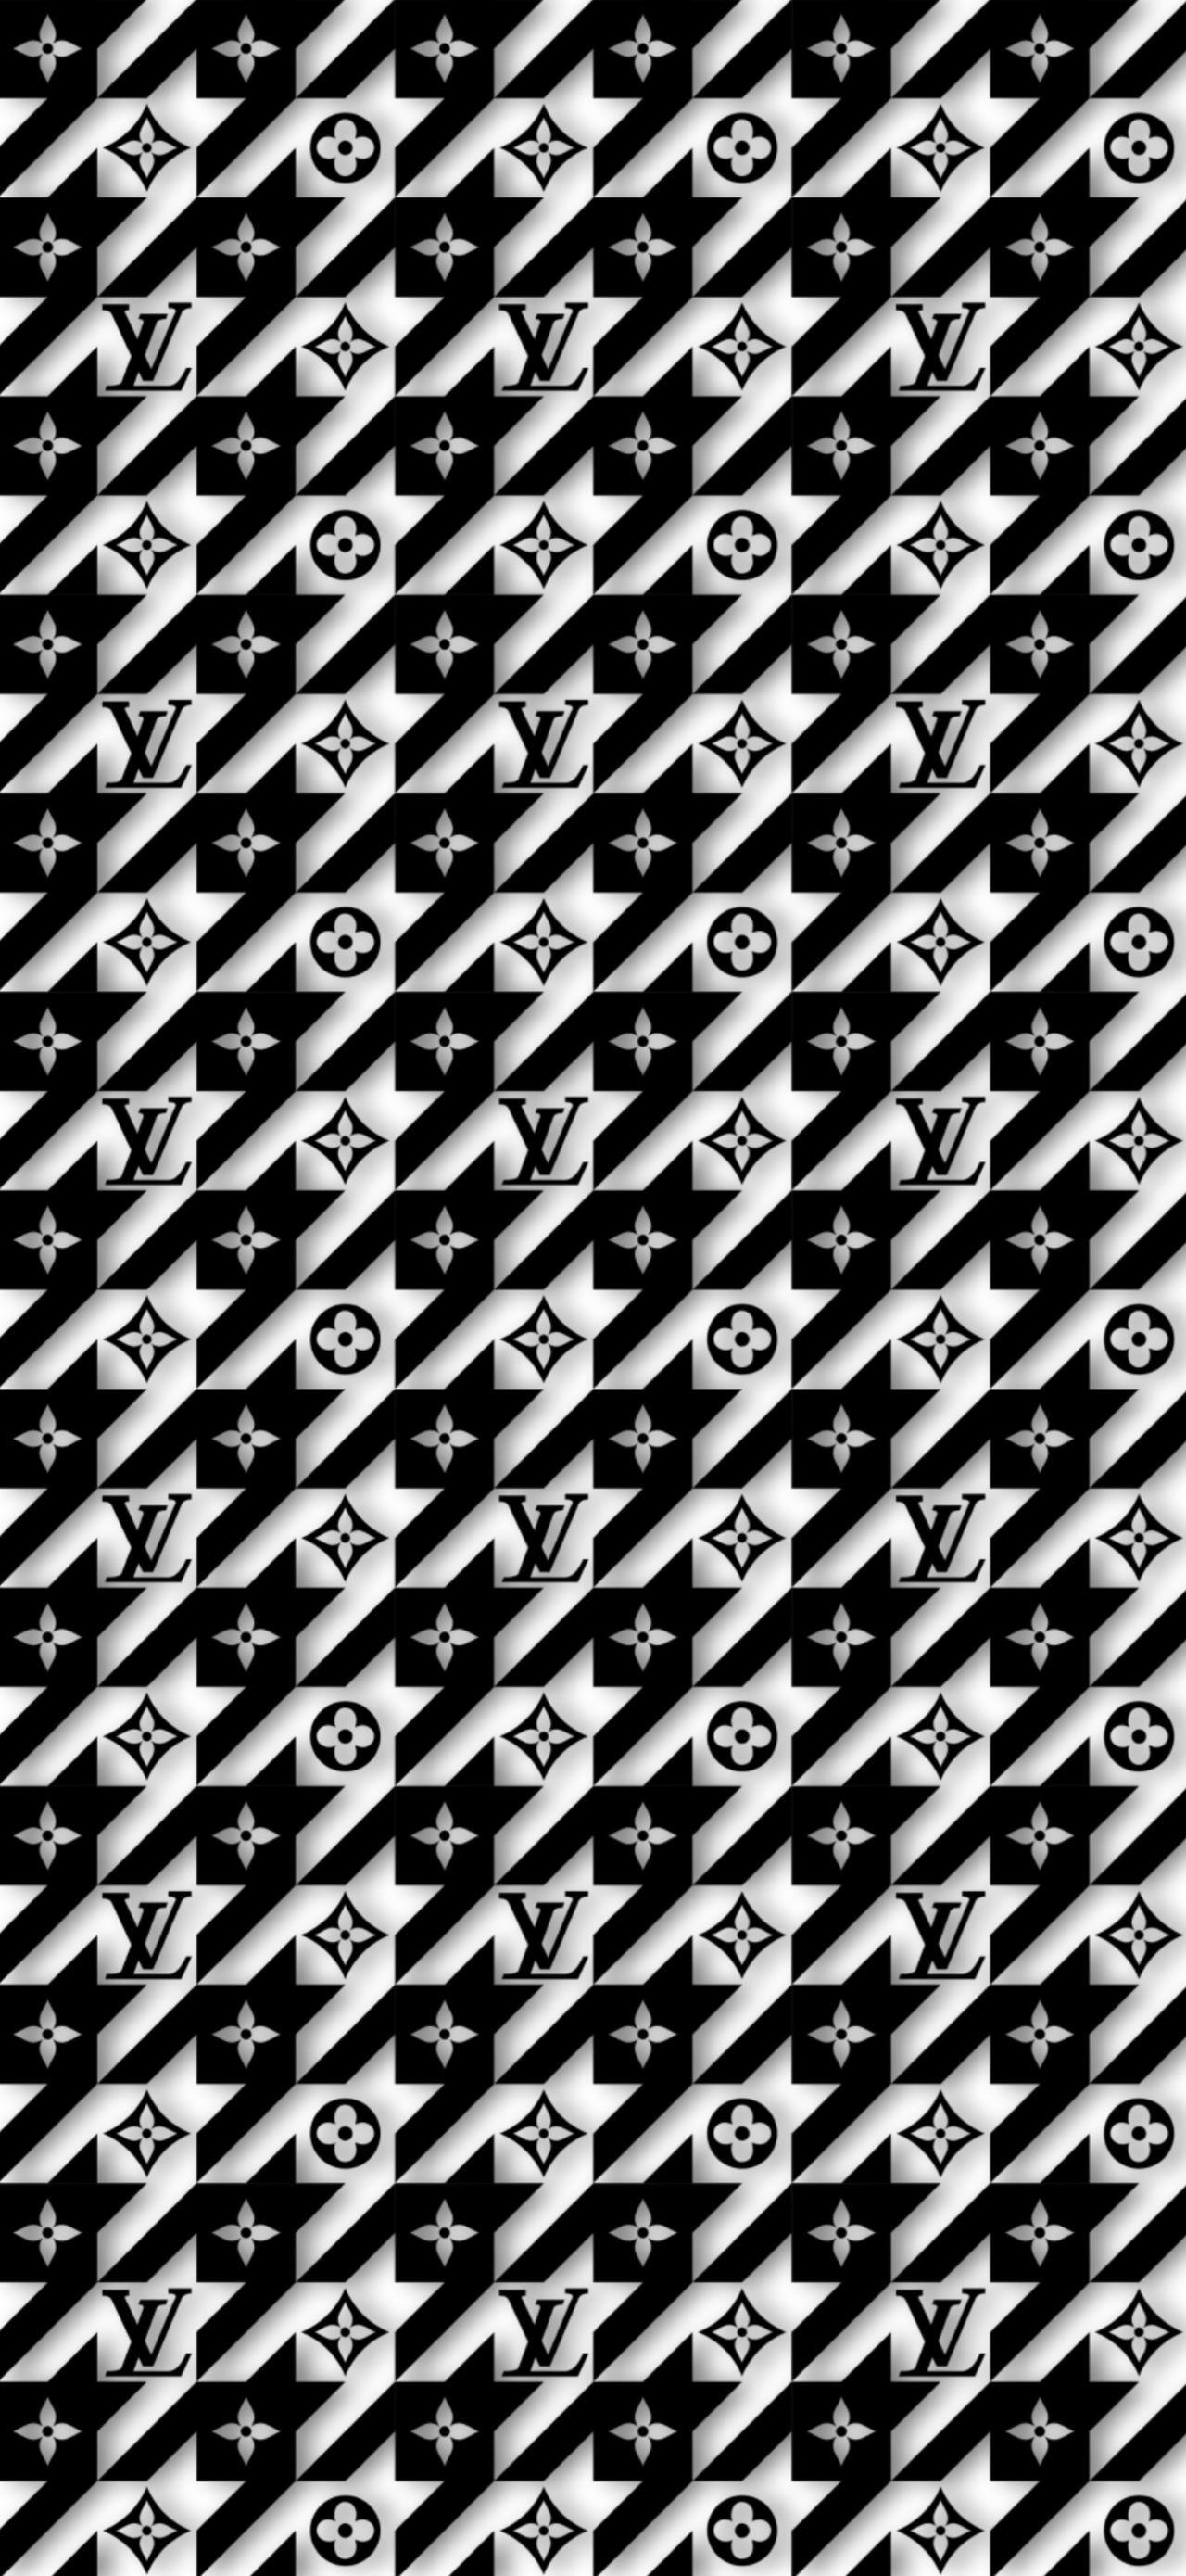 HD Louis Vuitton Logo Pattern by TeVesMuyNerviosa on DeviantArt